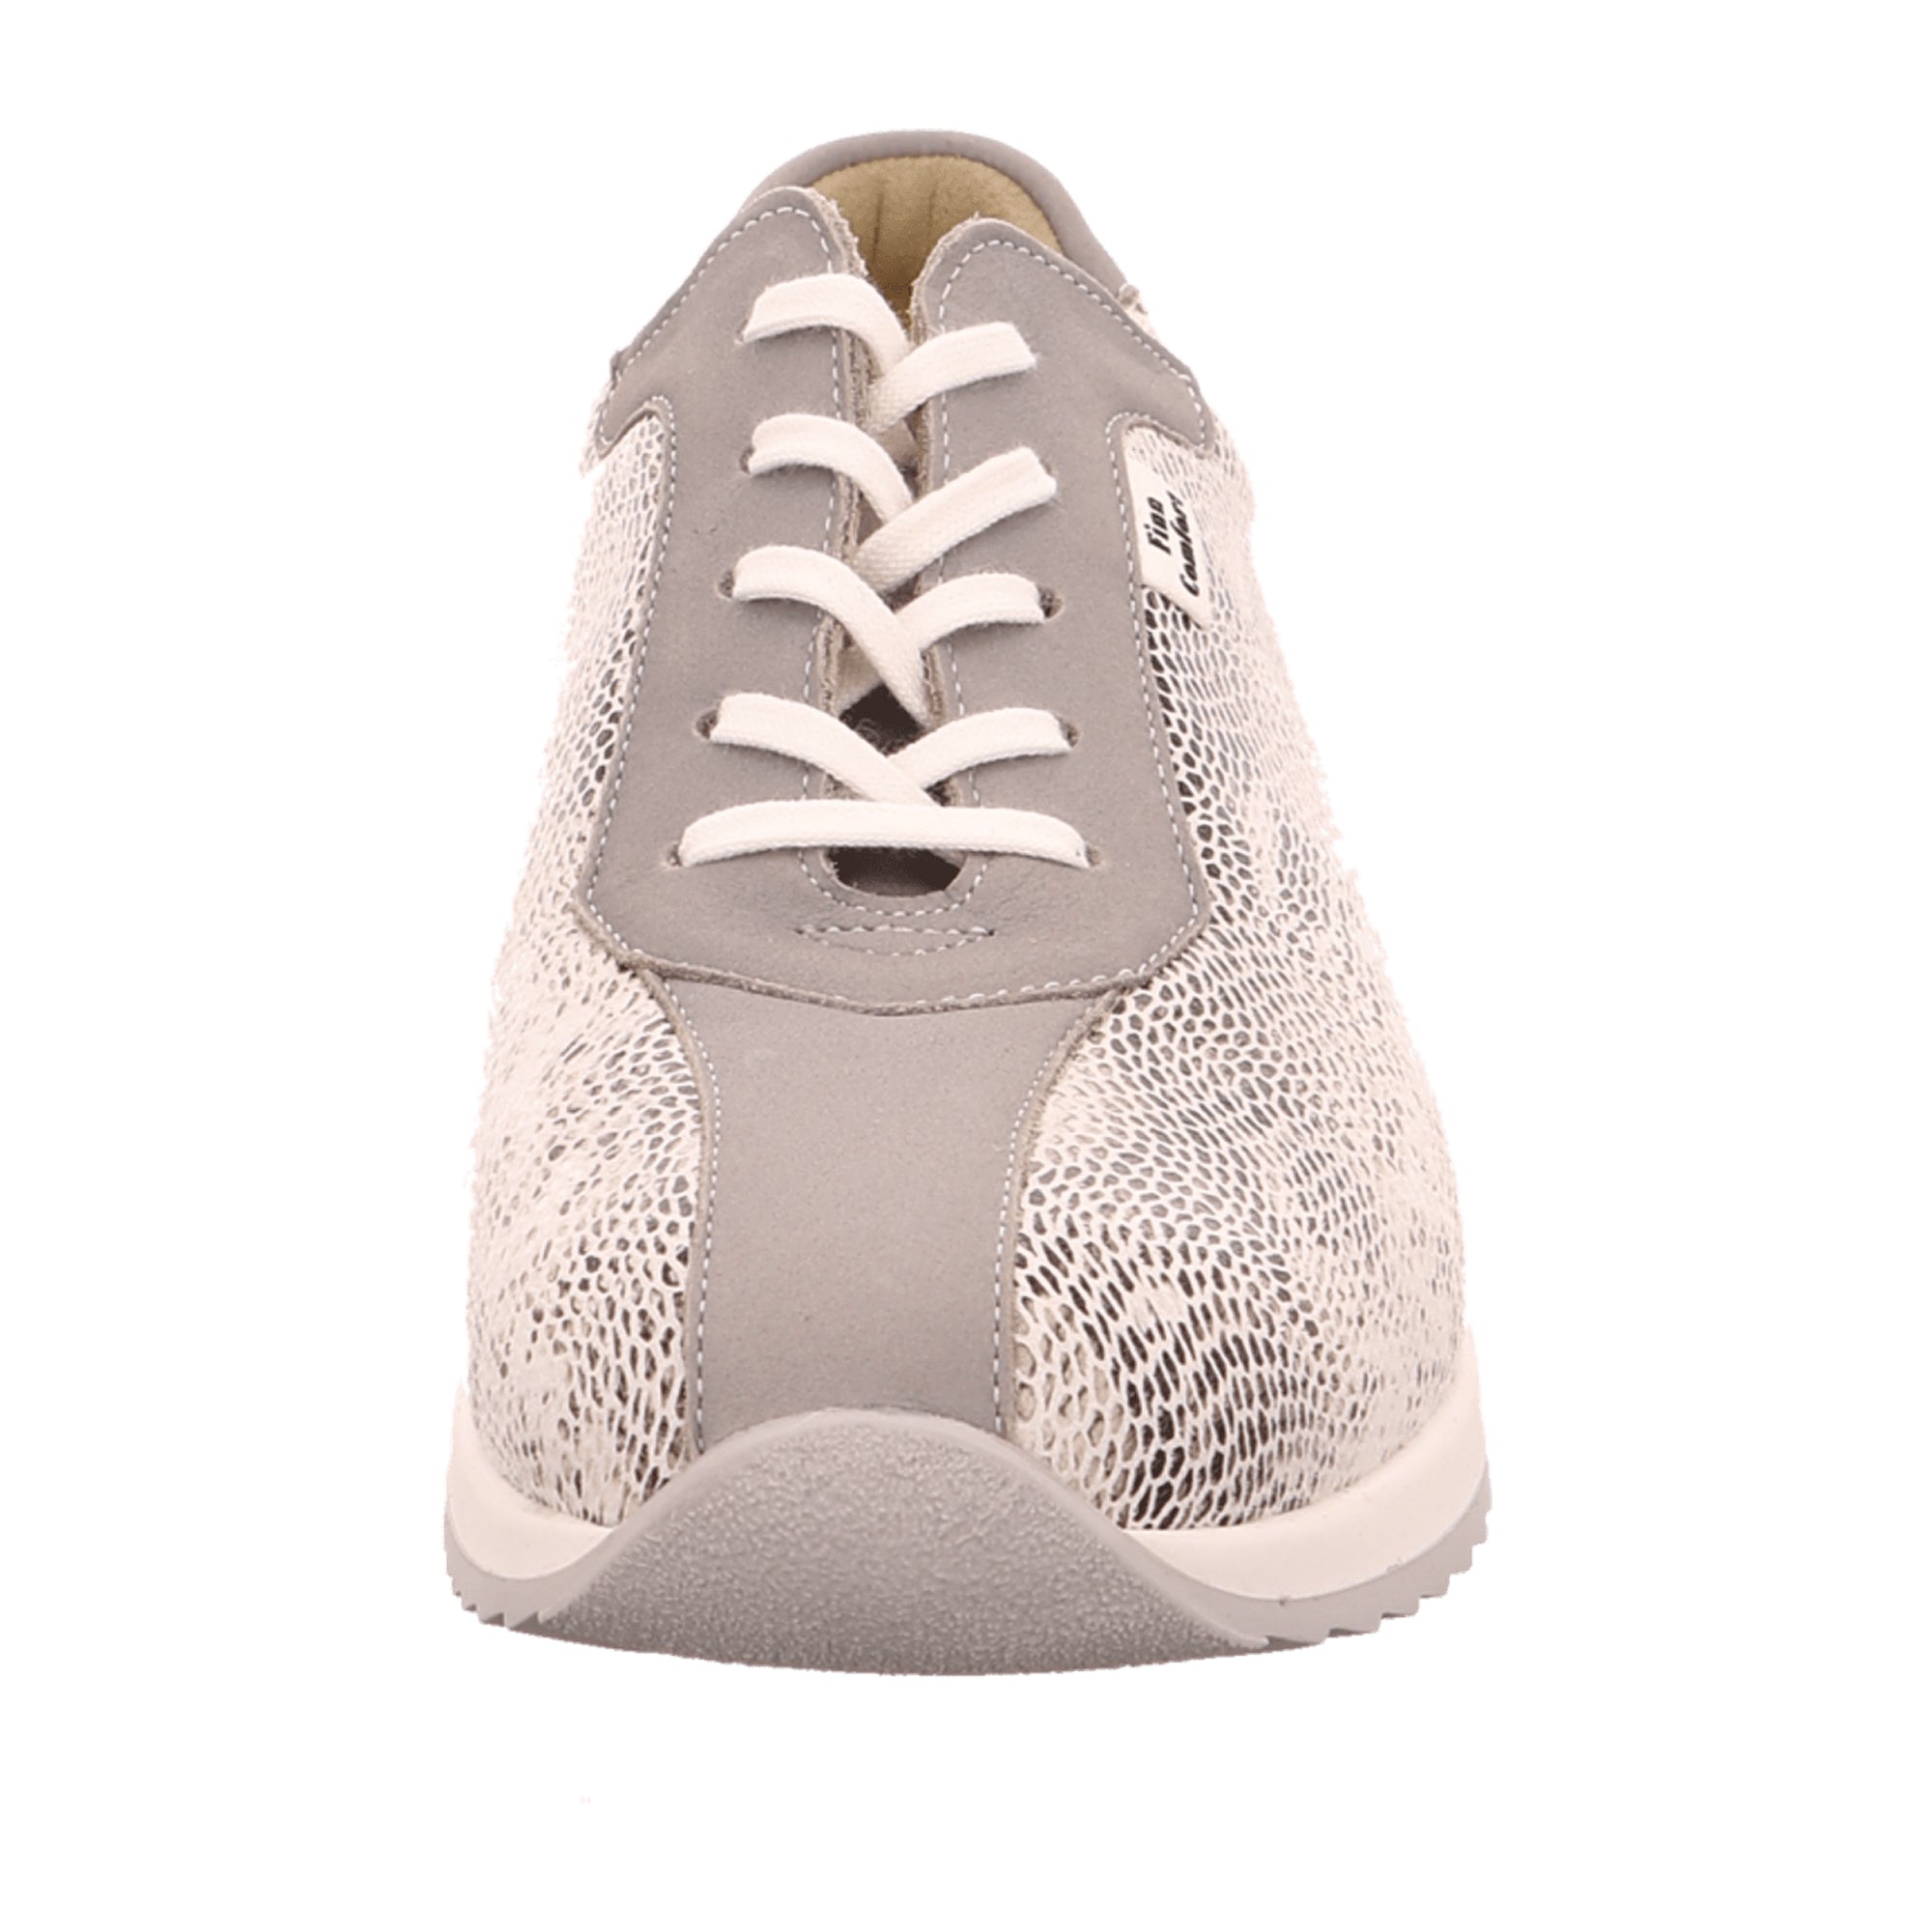 Finn Comfort Melk Women's Comfortable Walking Shoes, Stylish Grey